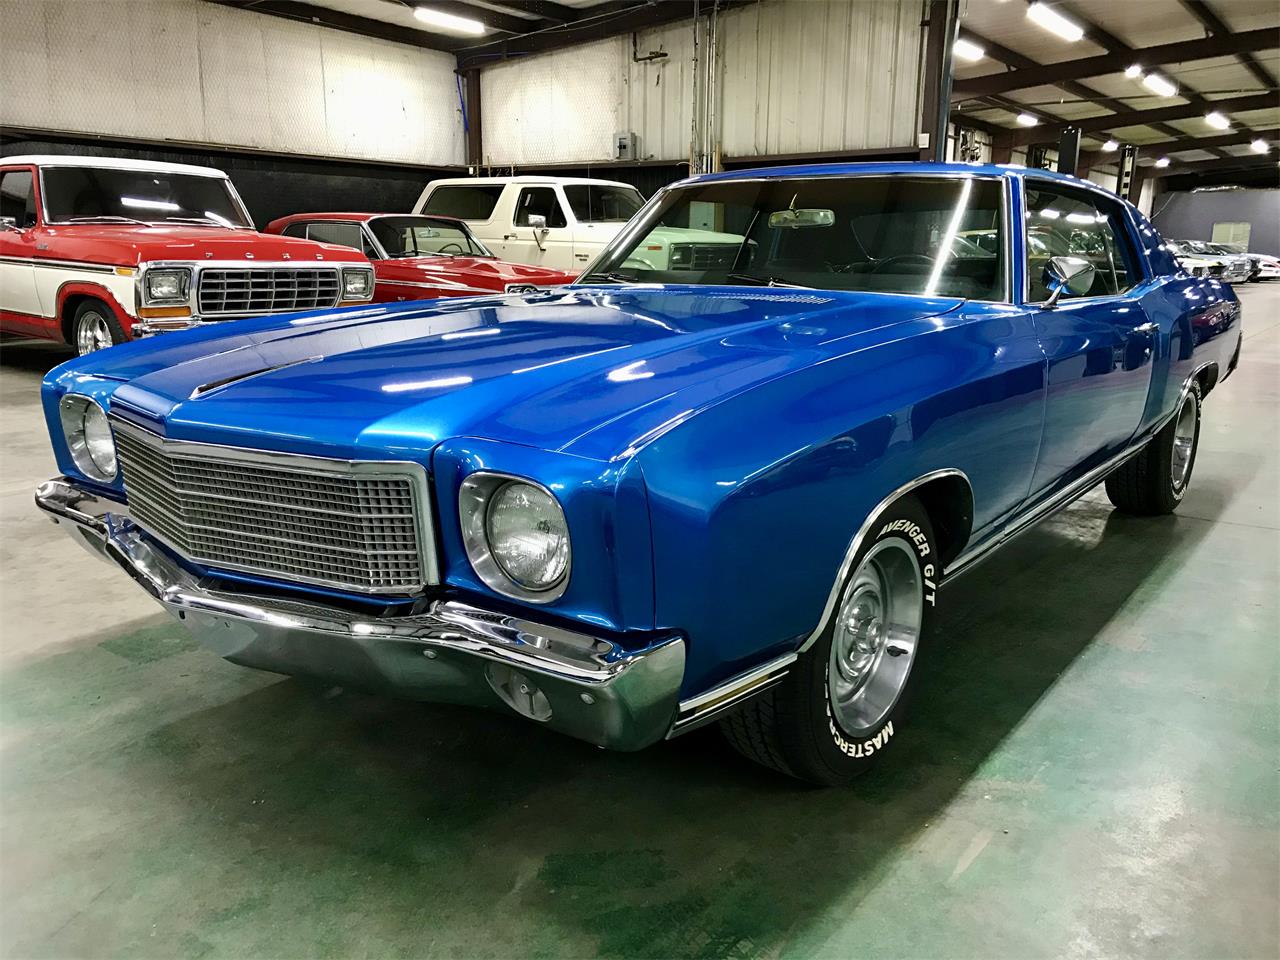 For Sale: 1970 Chevrolet Monte Carlo in Sherman, Texas.